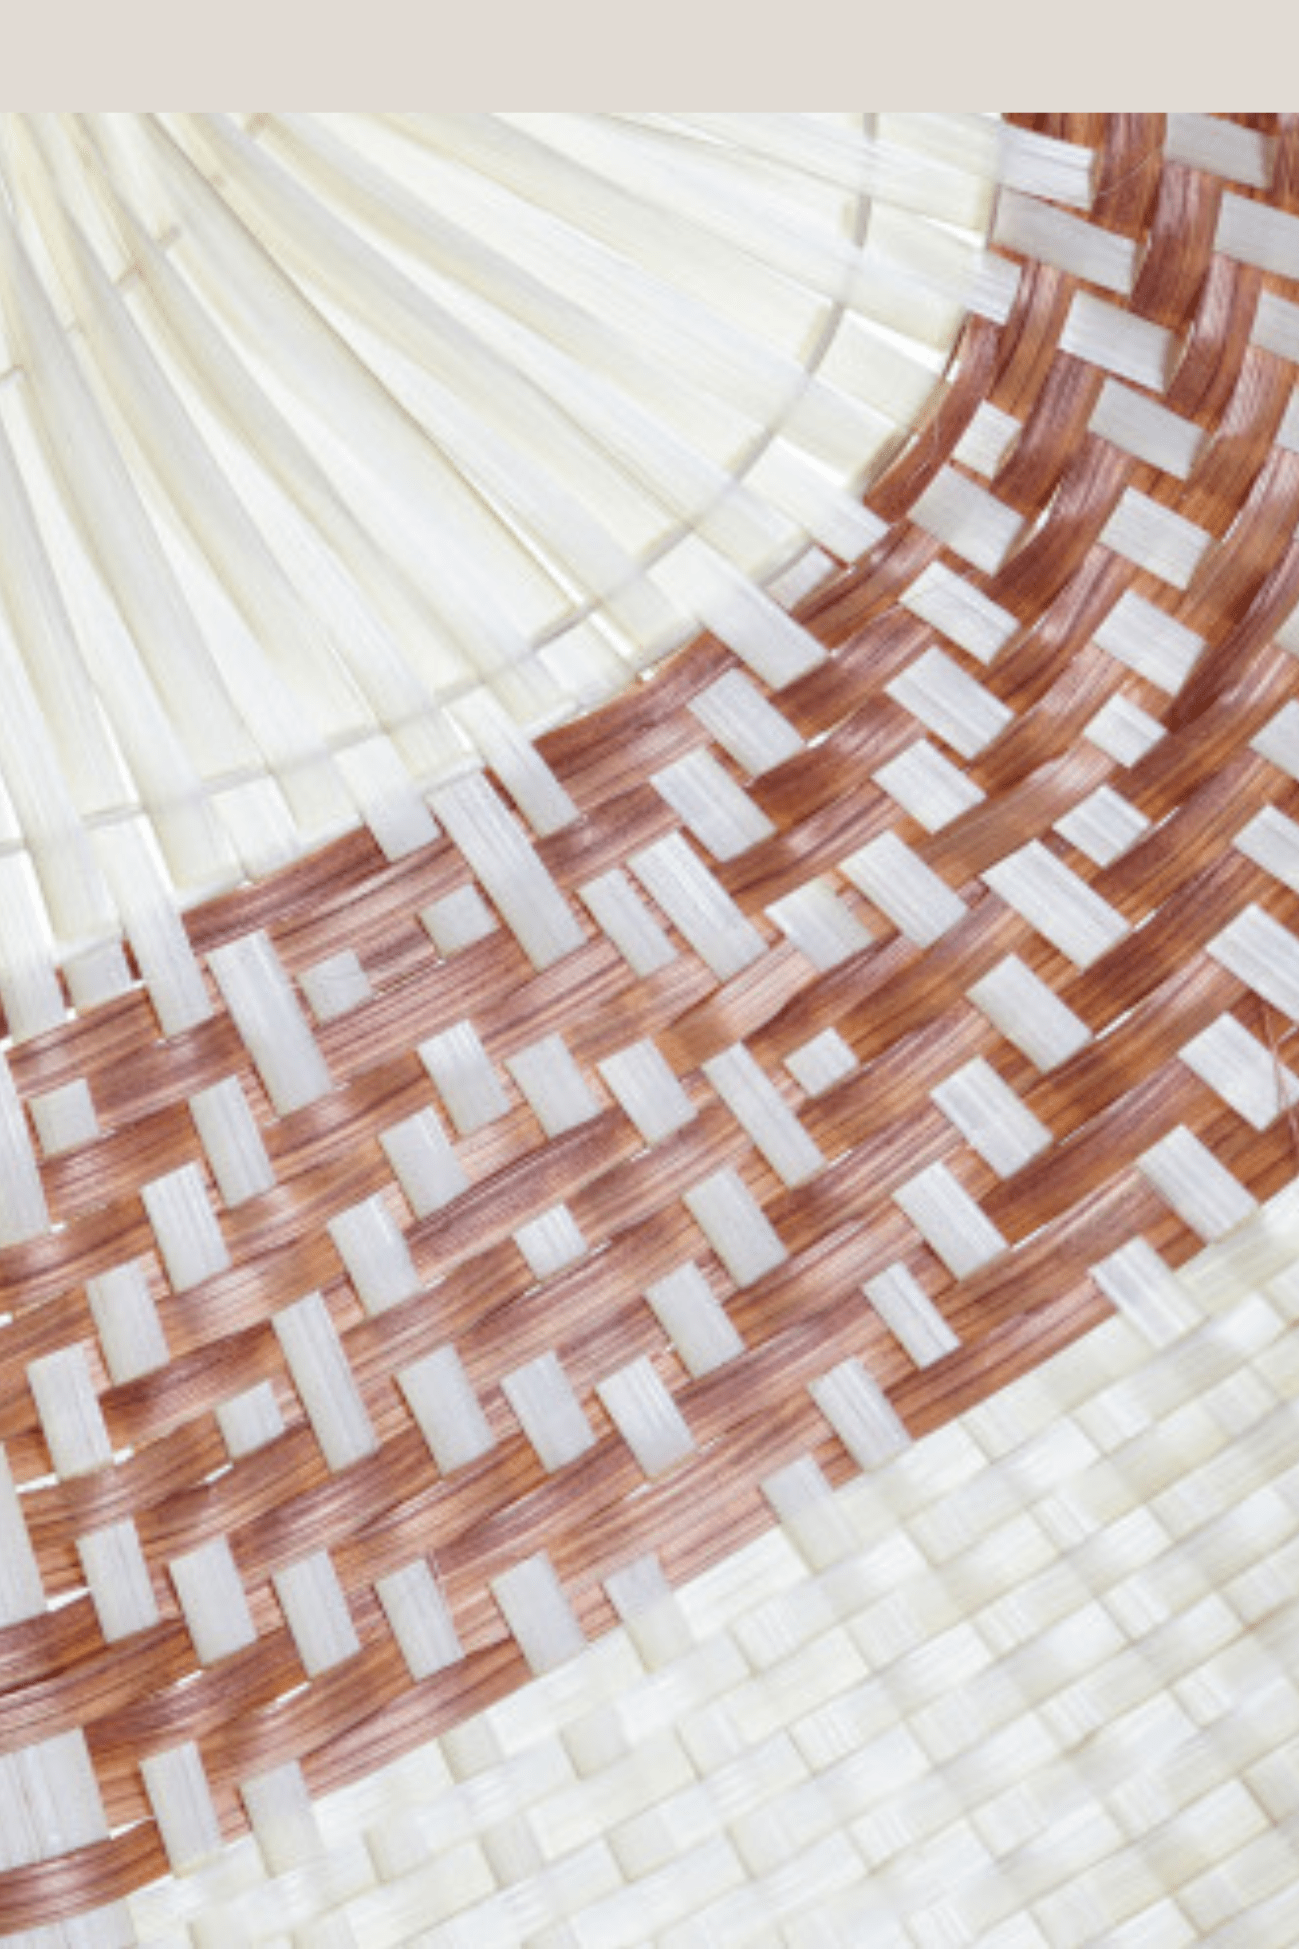 Item International Noya Ventaglio decorativo da parete in bambù